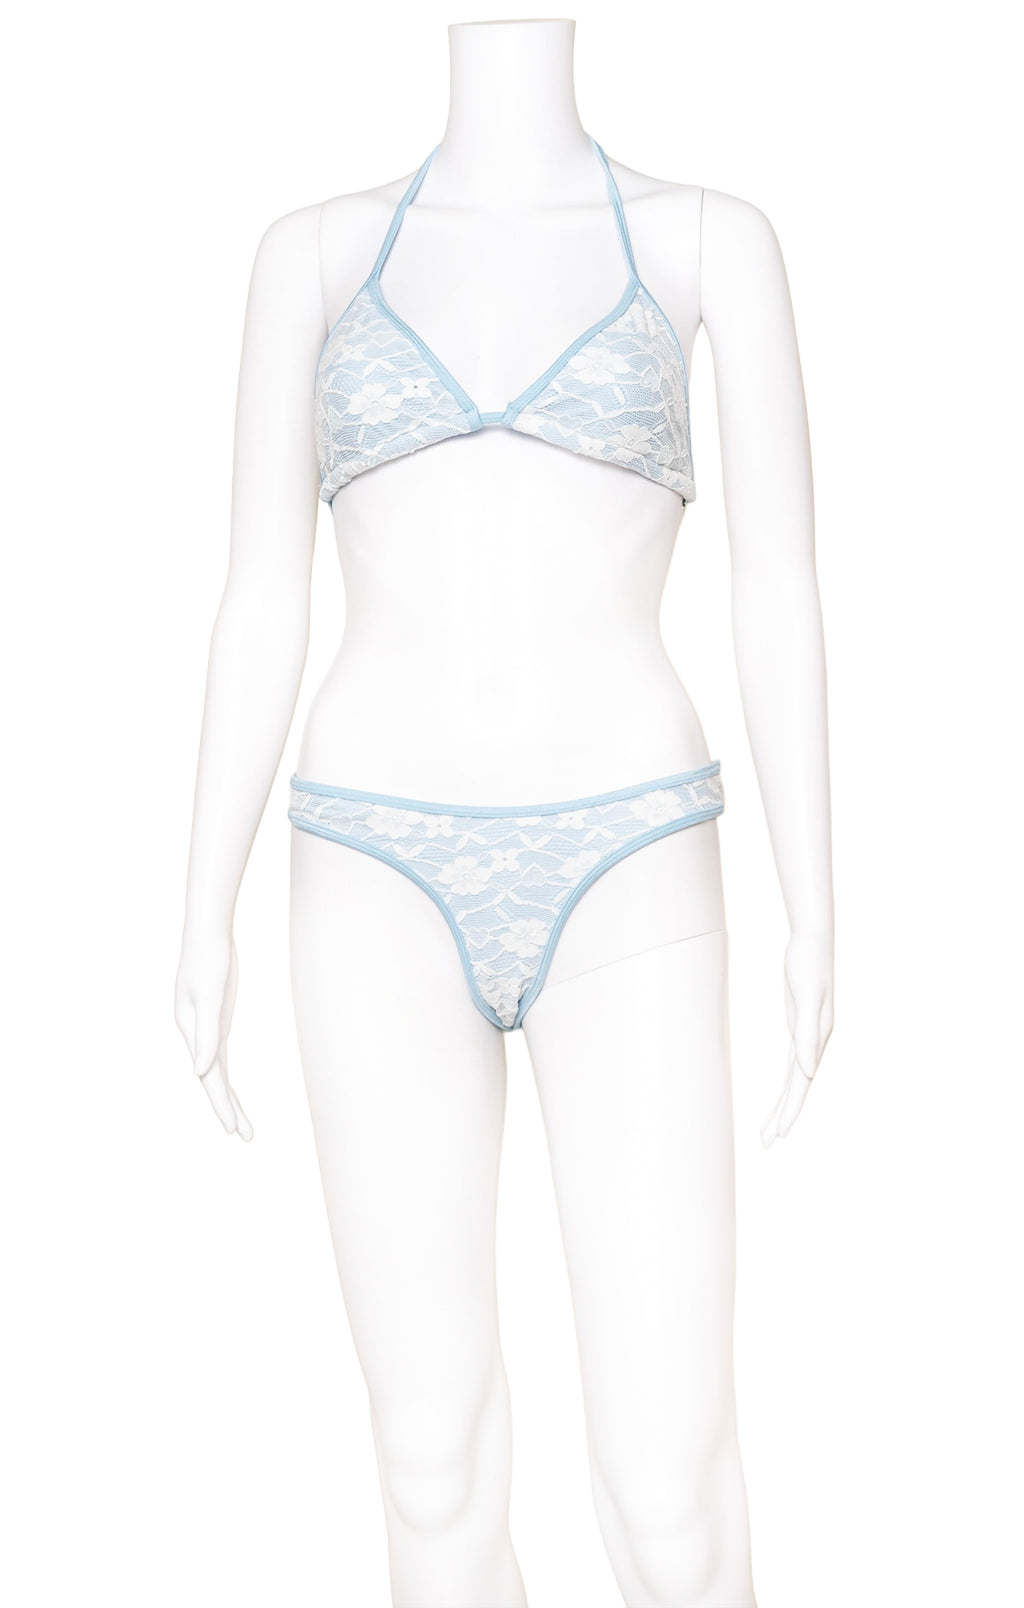 FRANKIES BIKINIS (NEW) with tags Bikini Set Size: S